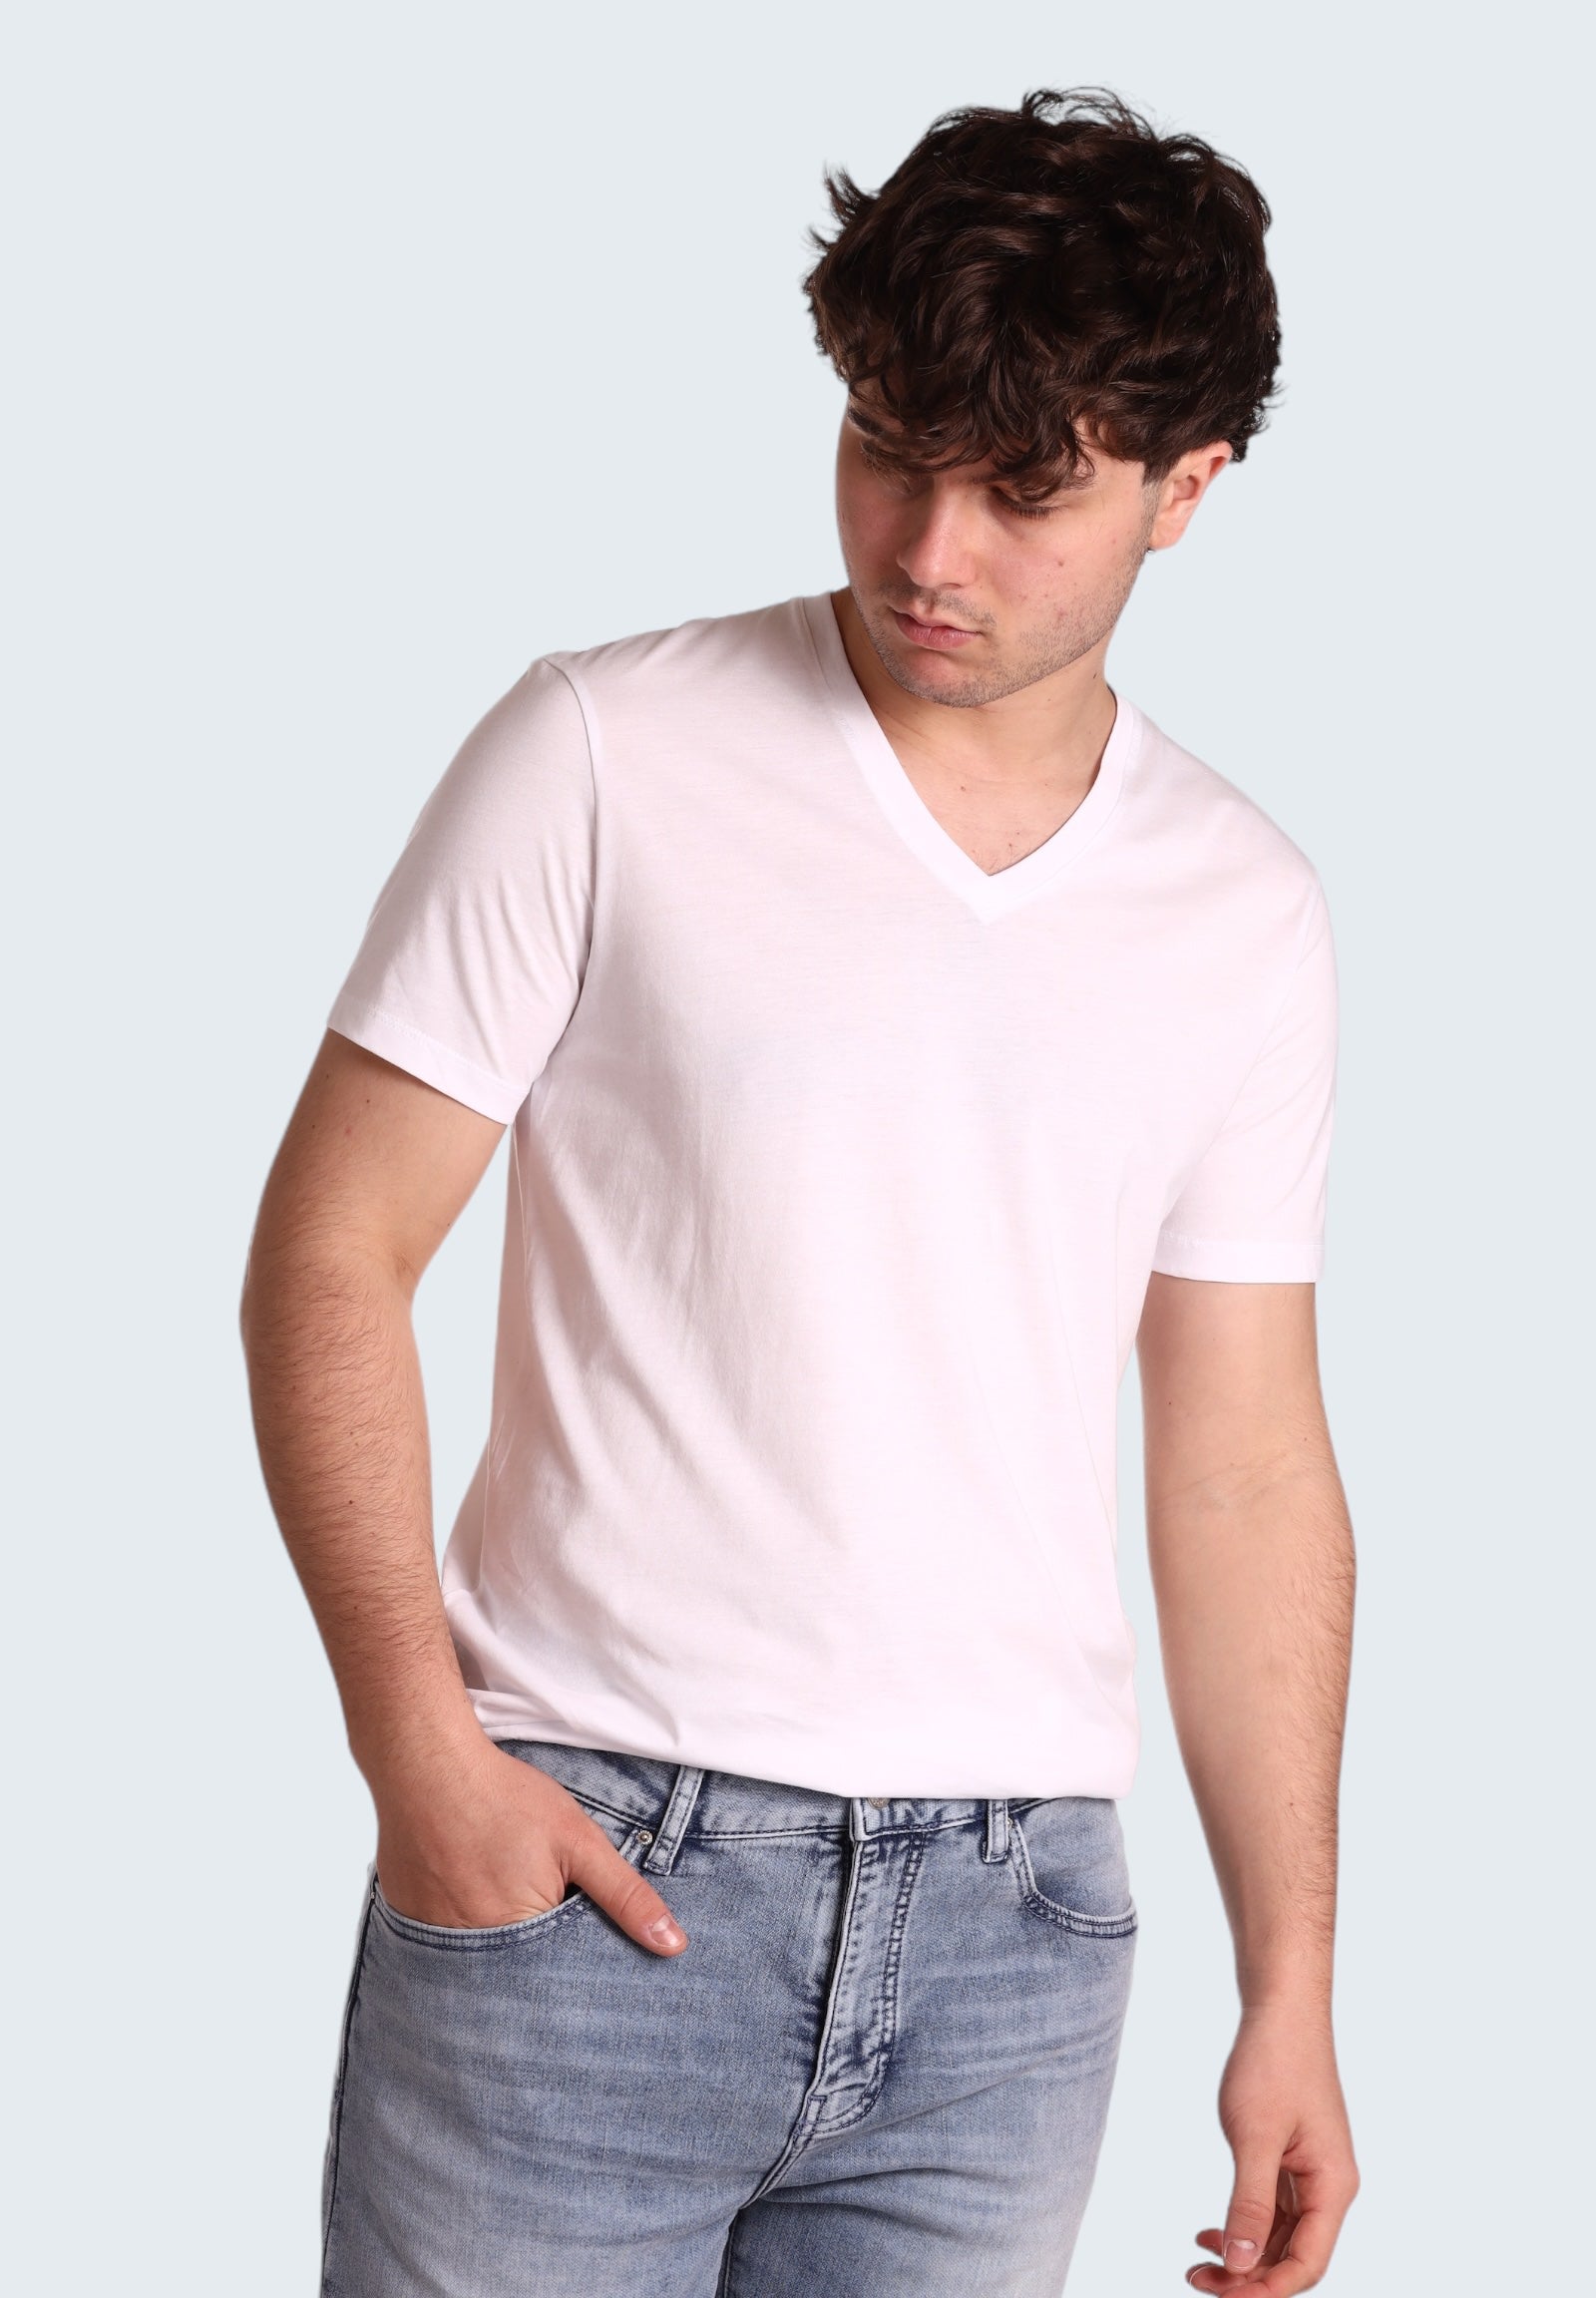 Armani Exchange T-Shirt* 8nzt75 White